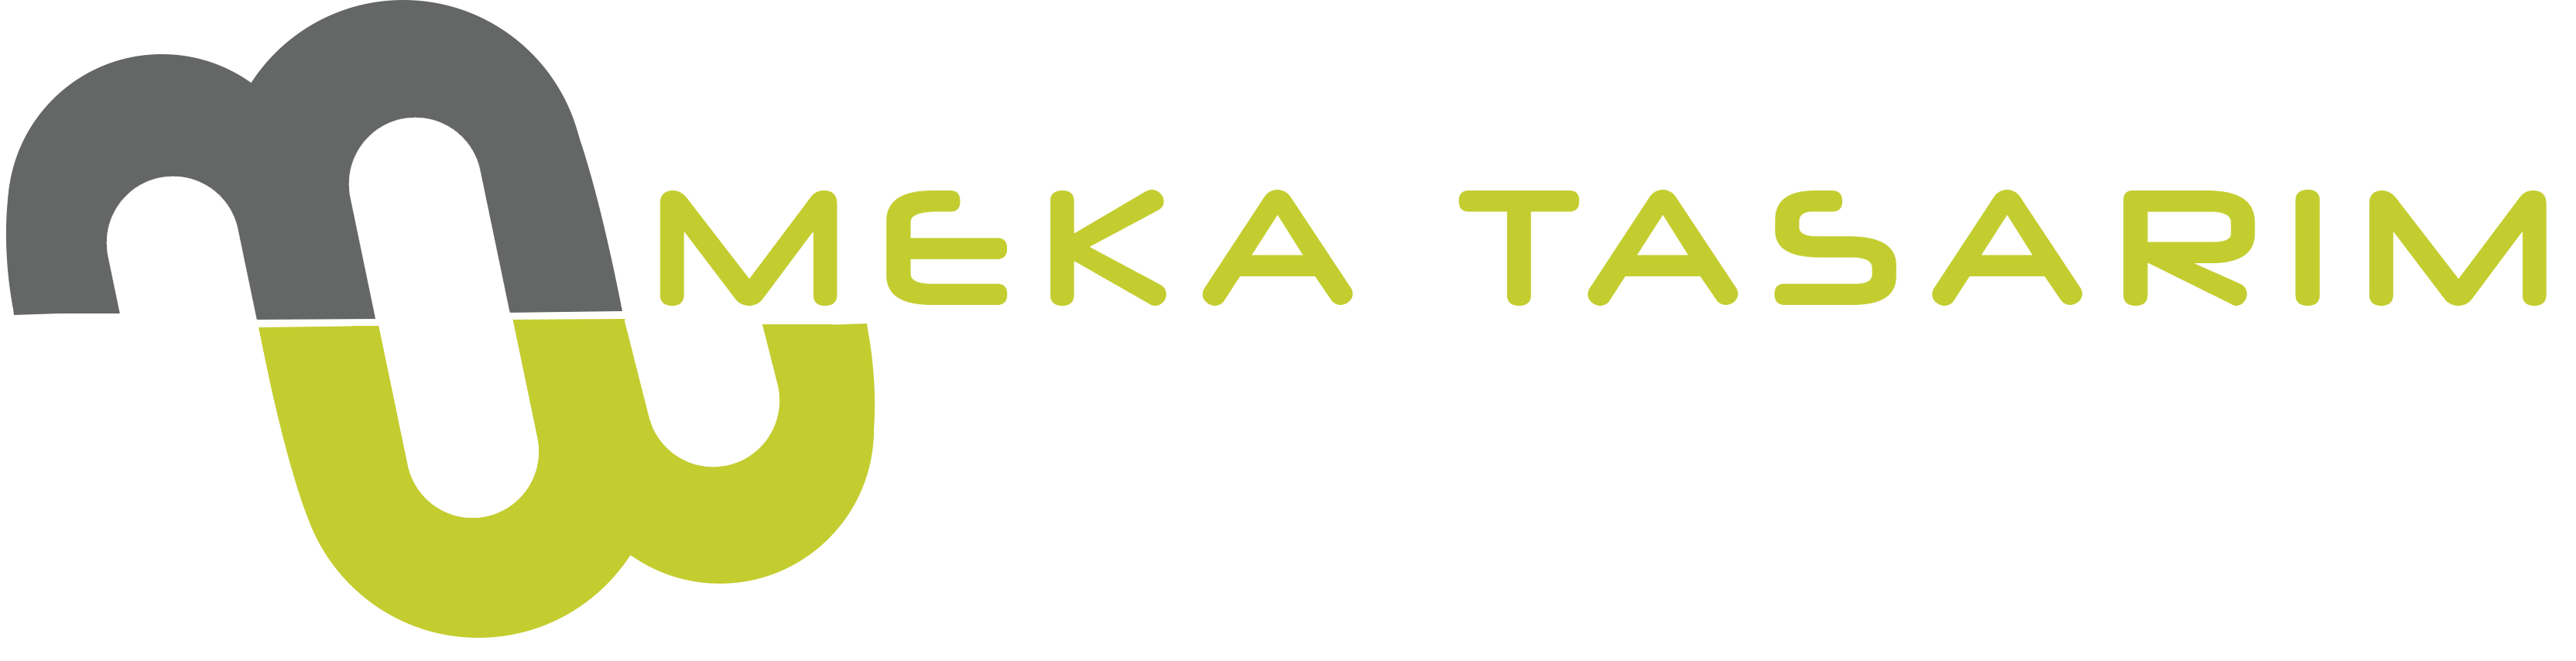 www.mekatasarim.com